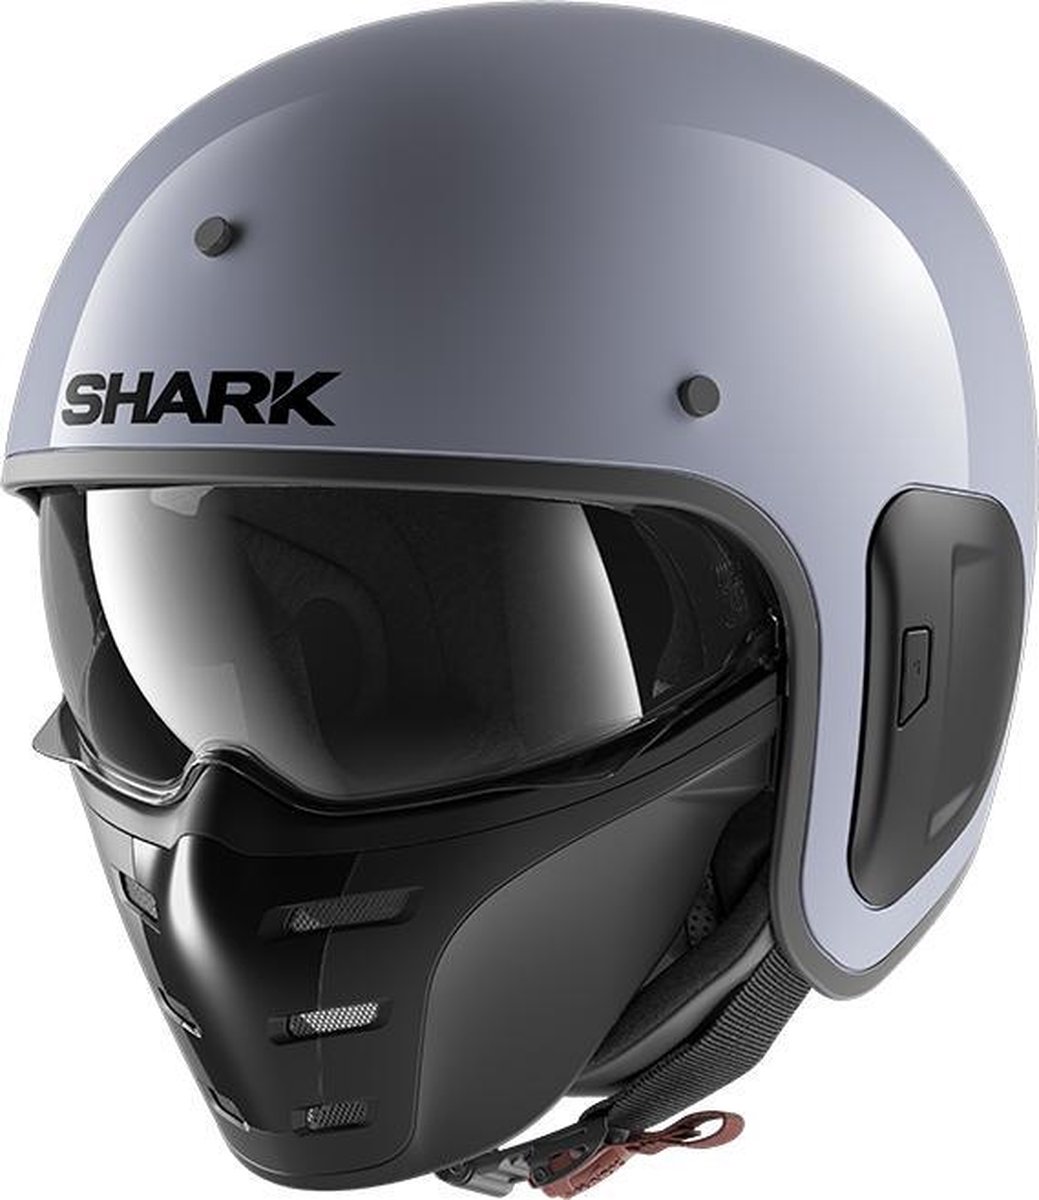 Shark S-Drak 2 motorhelm